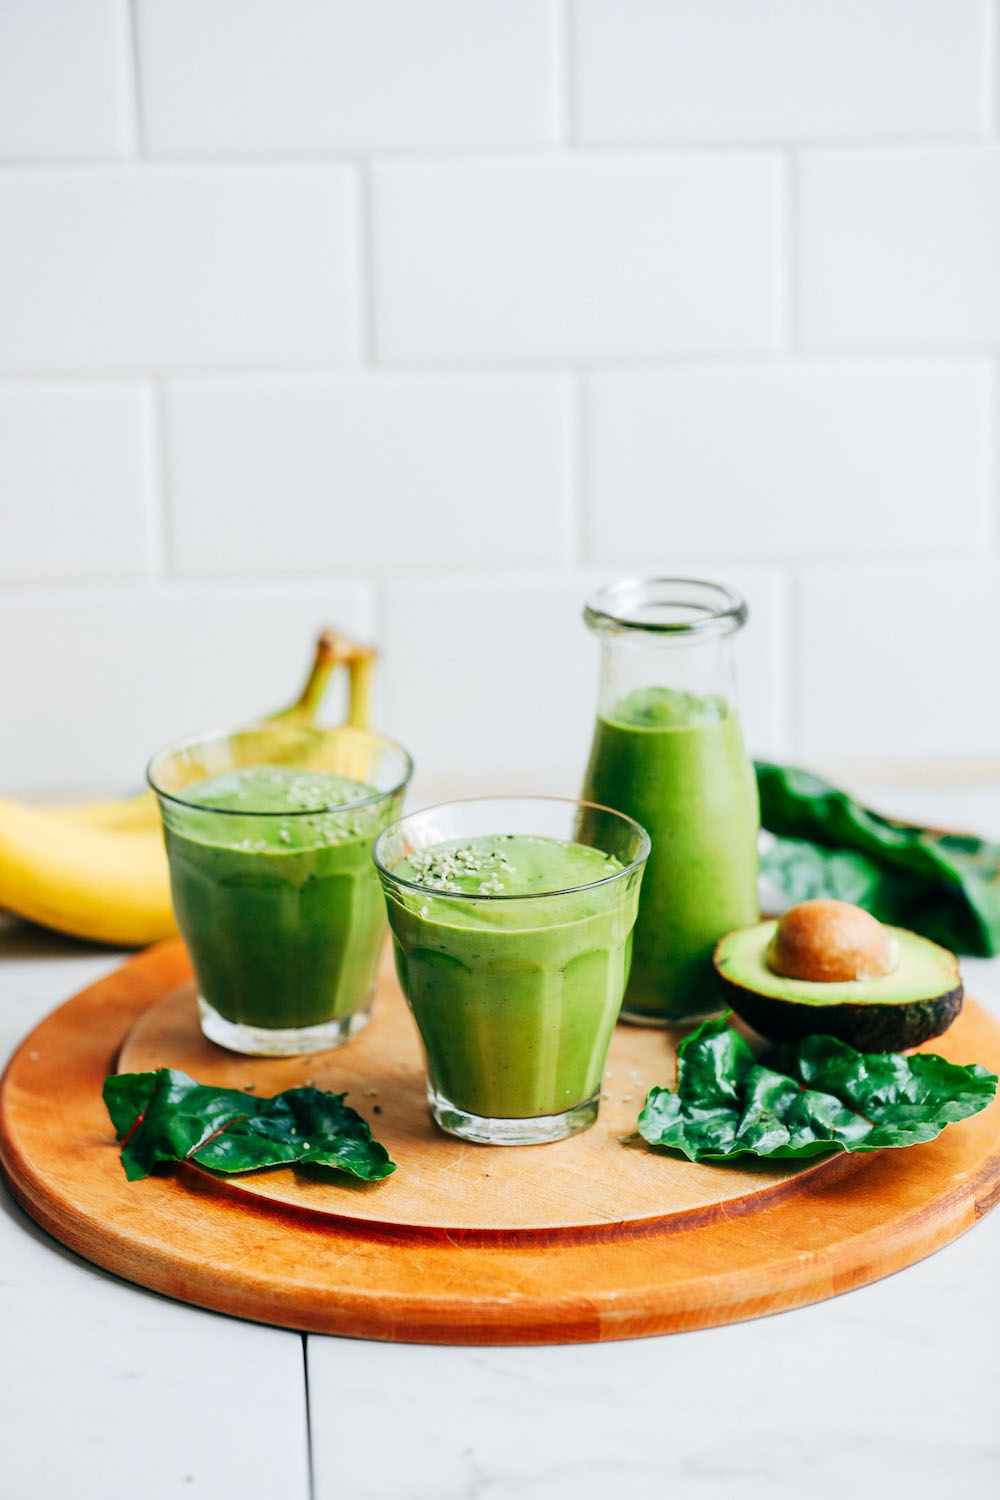 CREAMY-Avocado-Green-Smoothie-5-ingredients-GREEN-SO-healthy-satisfying-vegan-banana-plantbased-smoothie-greensmoothie-avocado-glutenfree-179